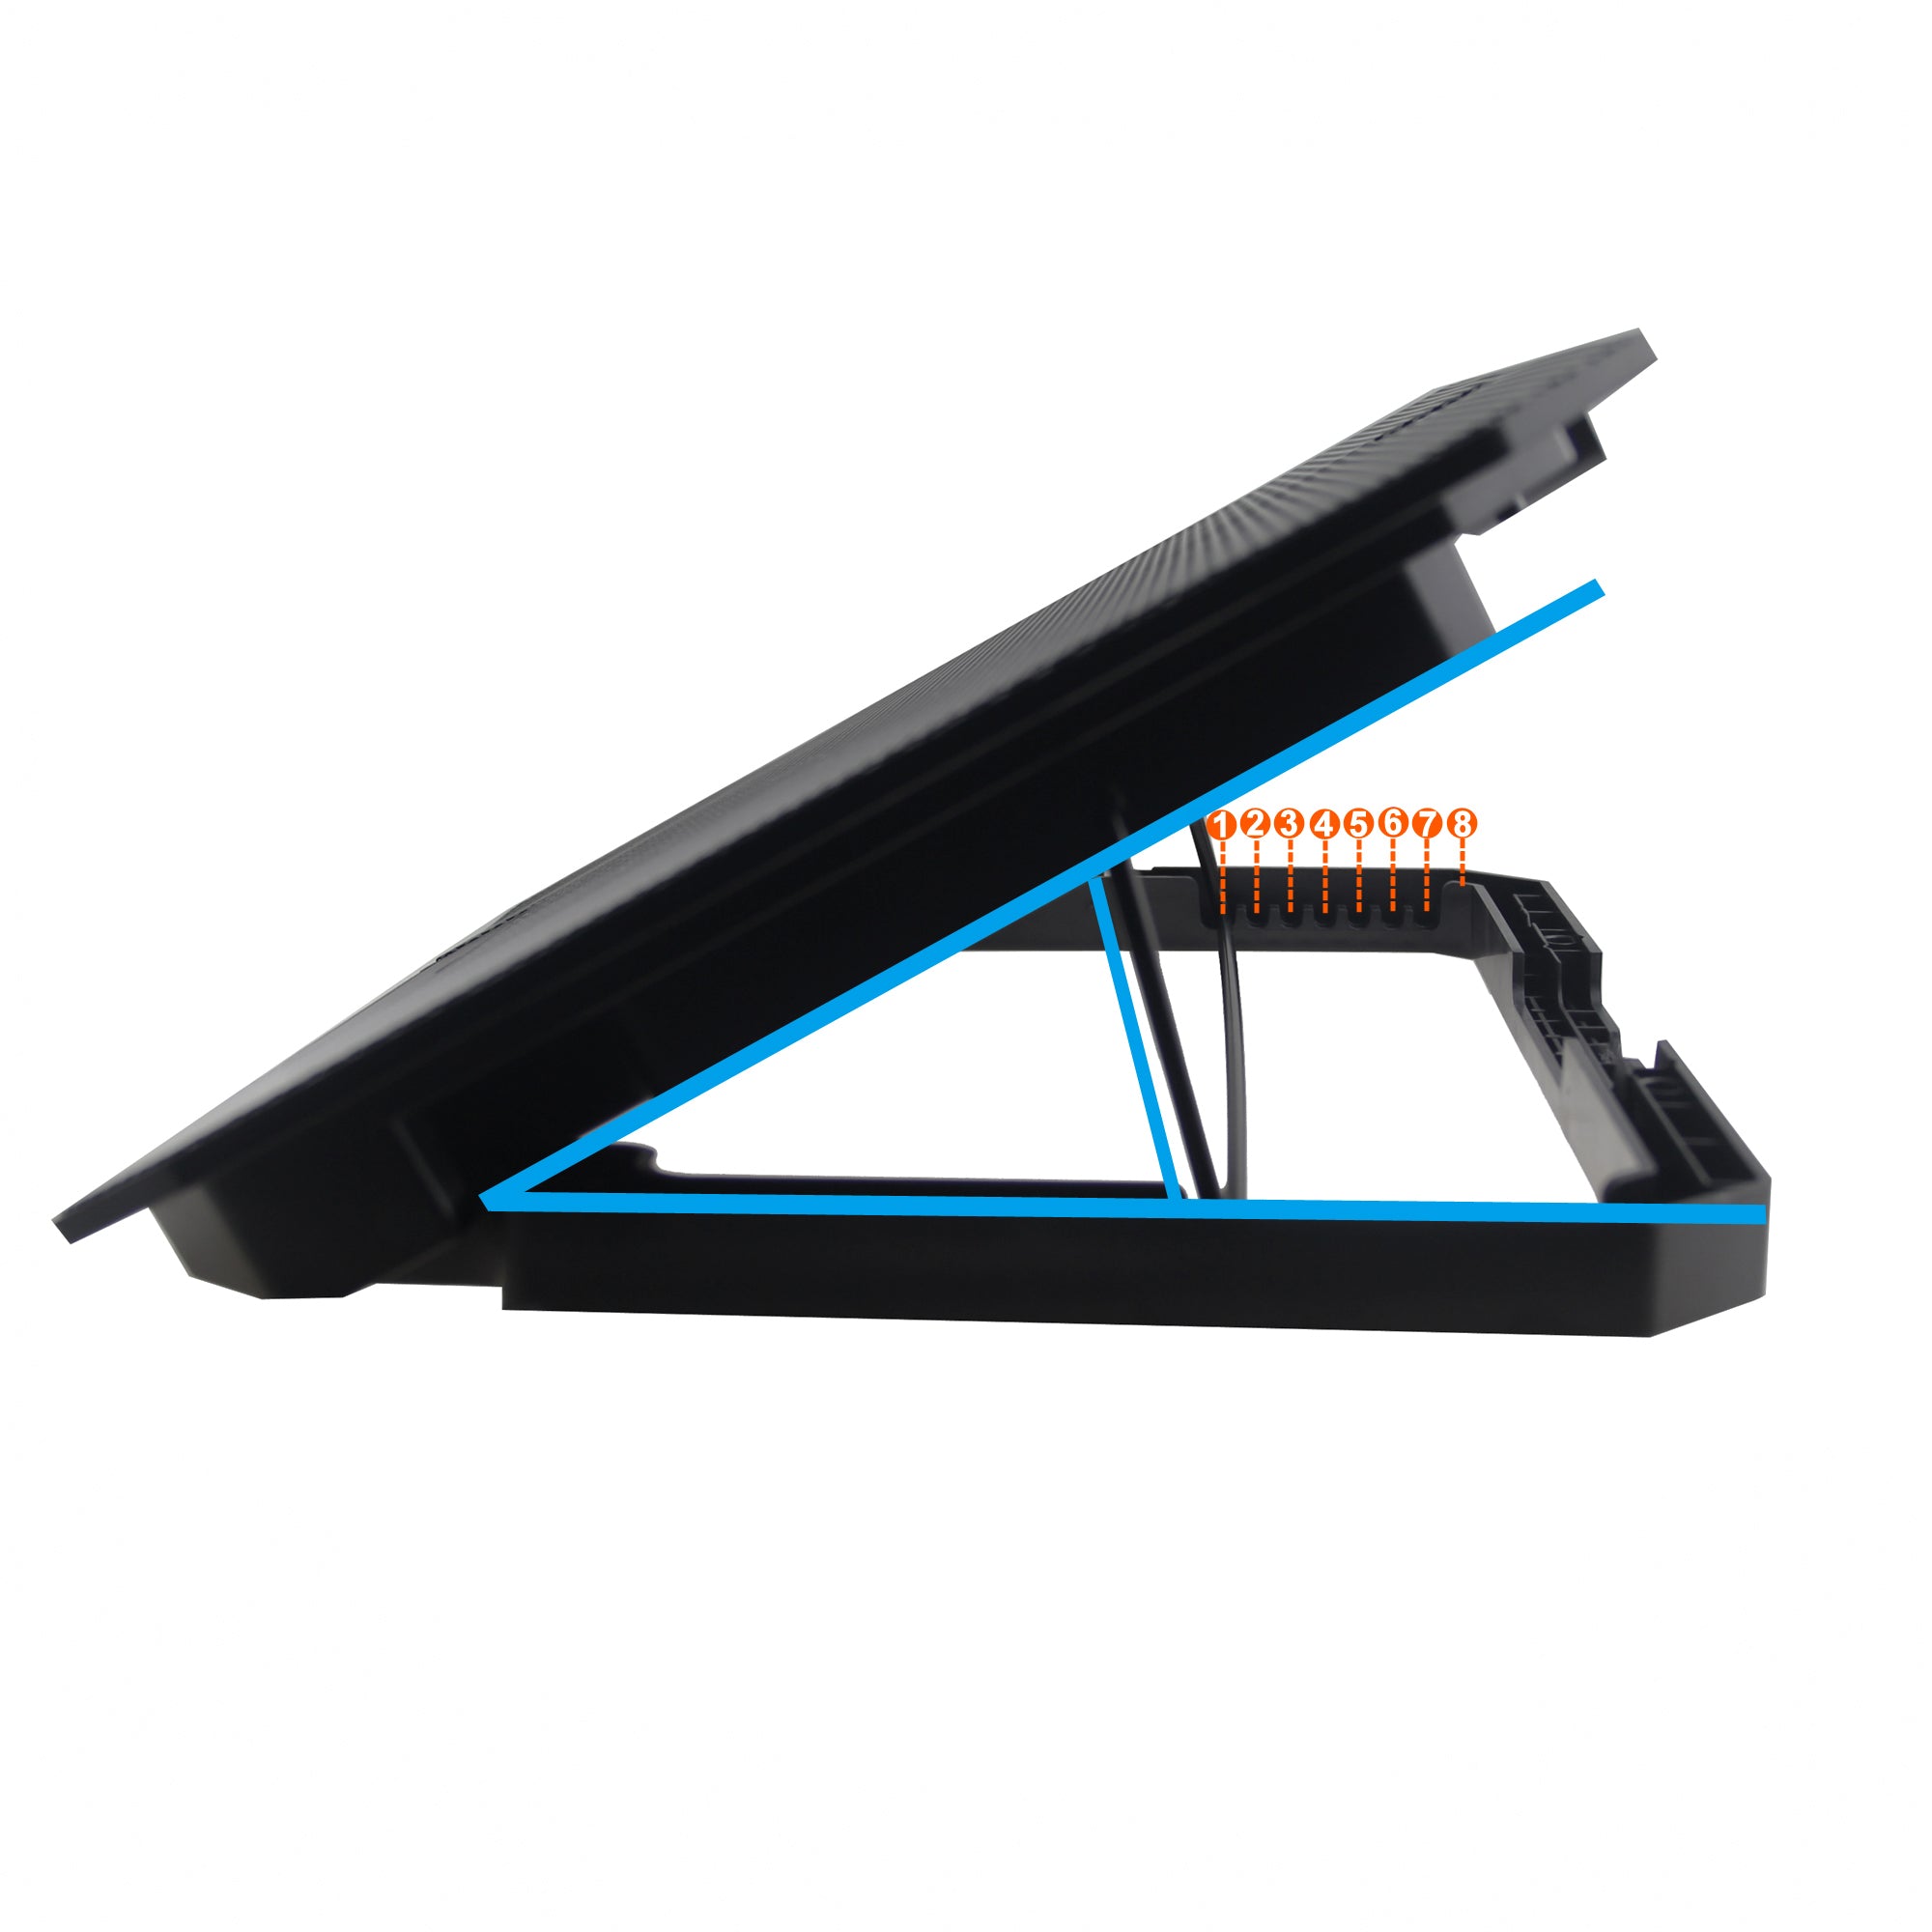 N11 8-Gear Height Adjustable Mute Notebook Dual Fan Cooler Desktop Laptop Cooling Stand - Red Light